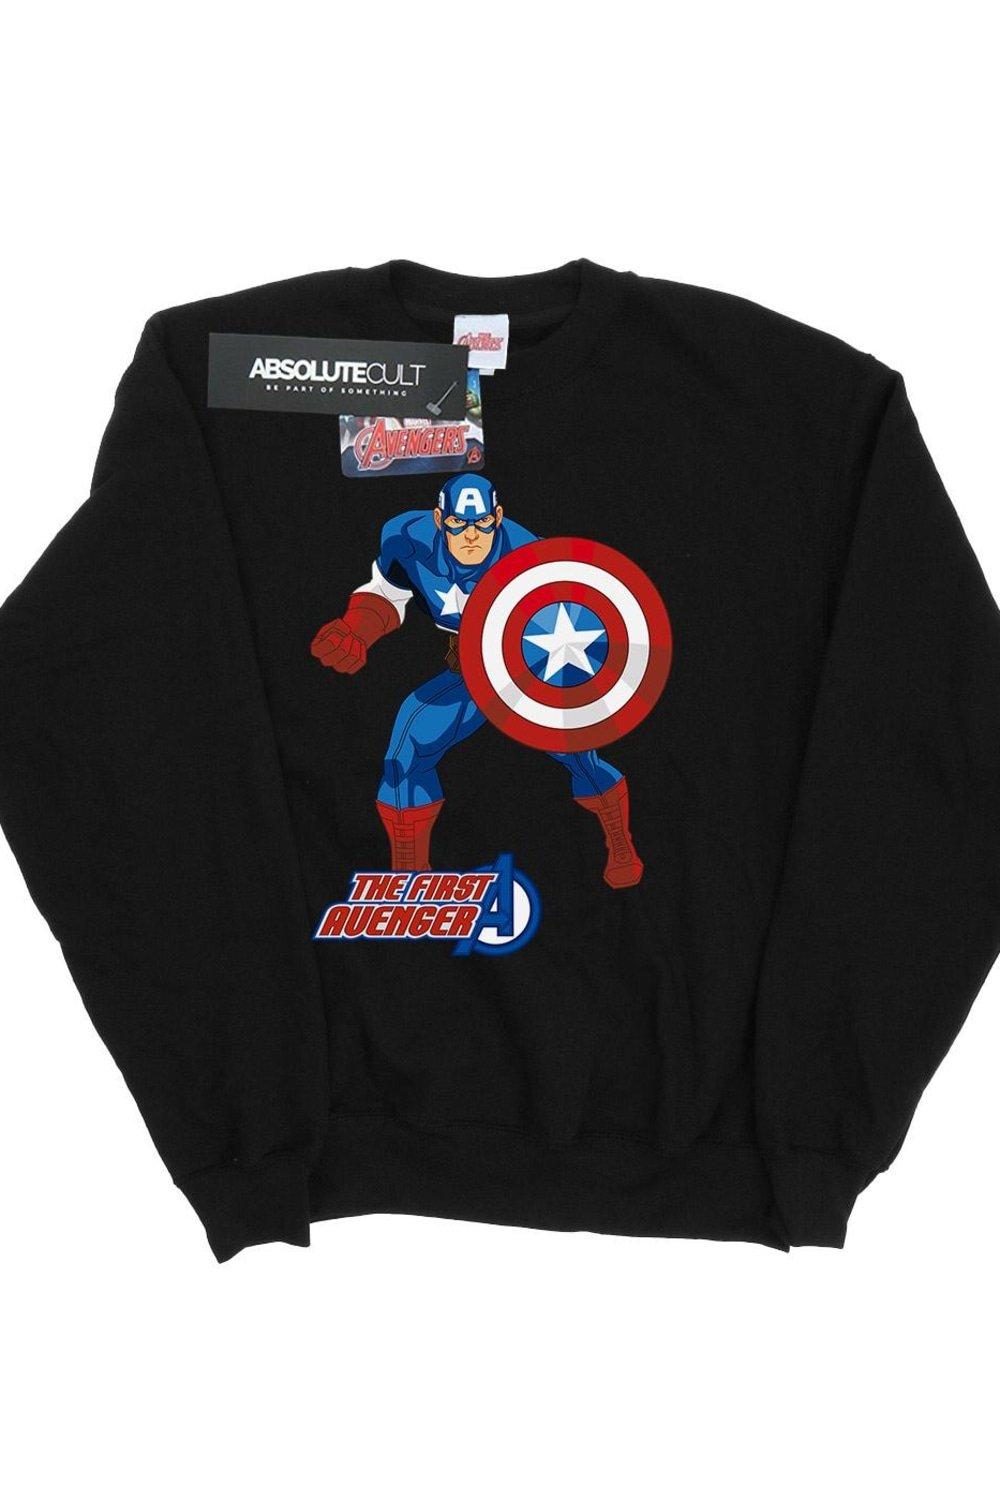 Captain America The First Avenger Sweatshirt